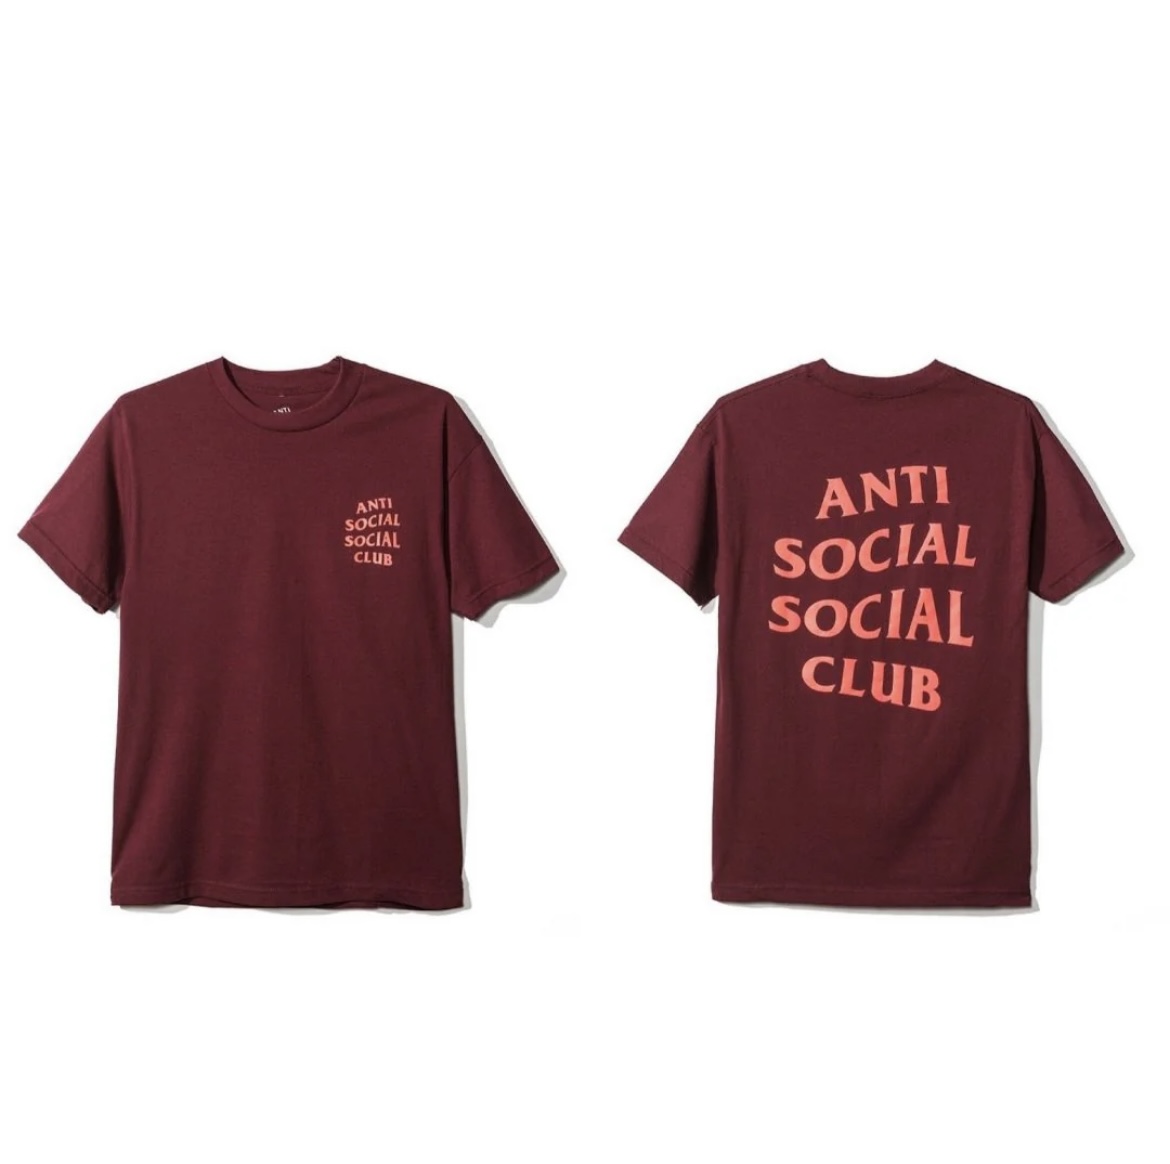 ASSC Anti Social Social Club Tee 2 Maroon Size L